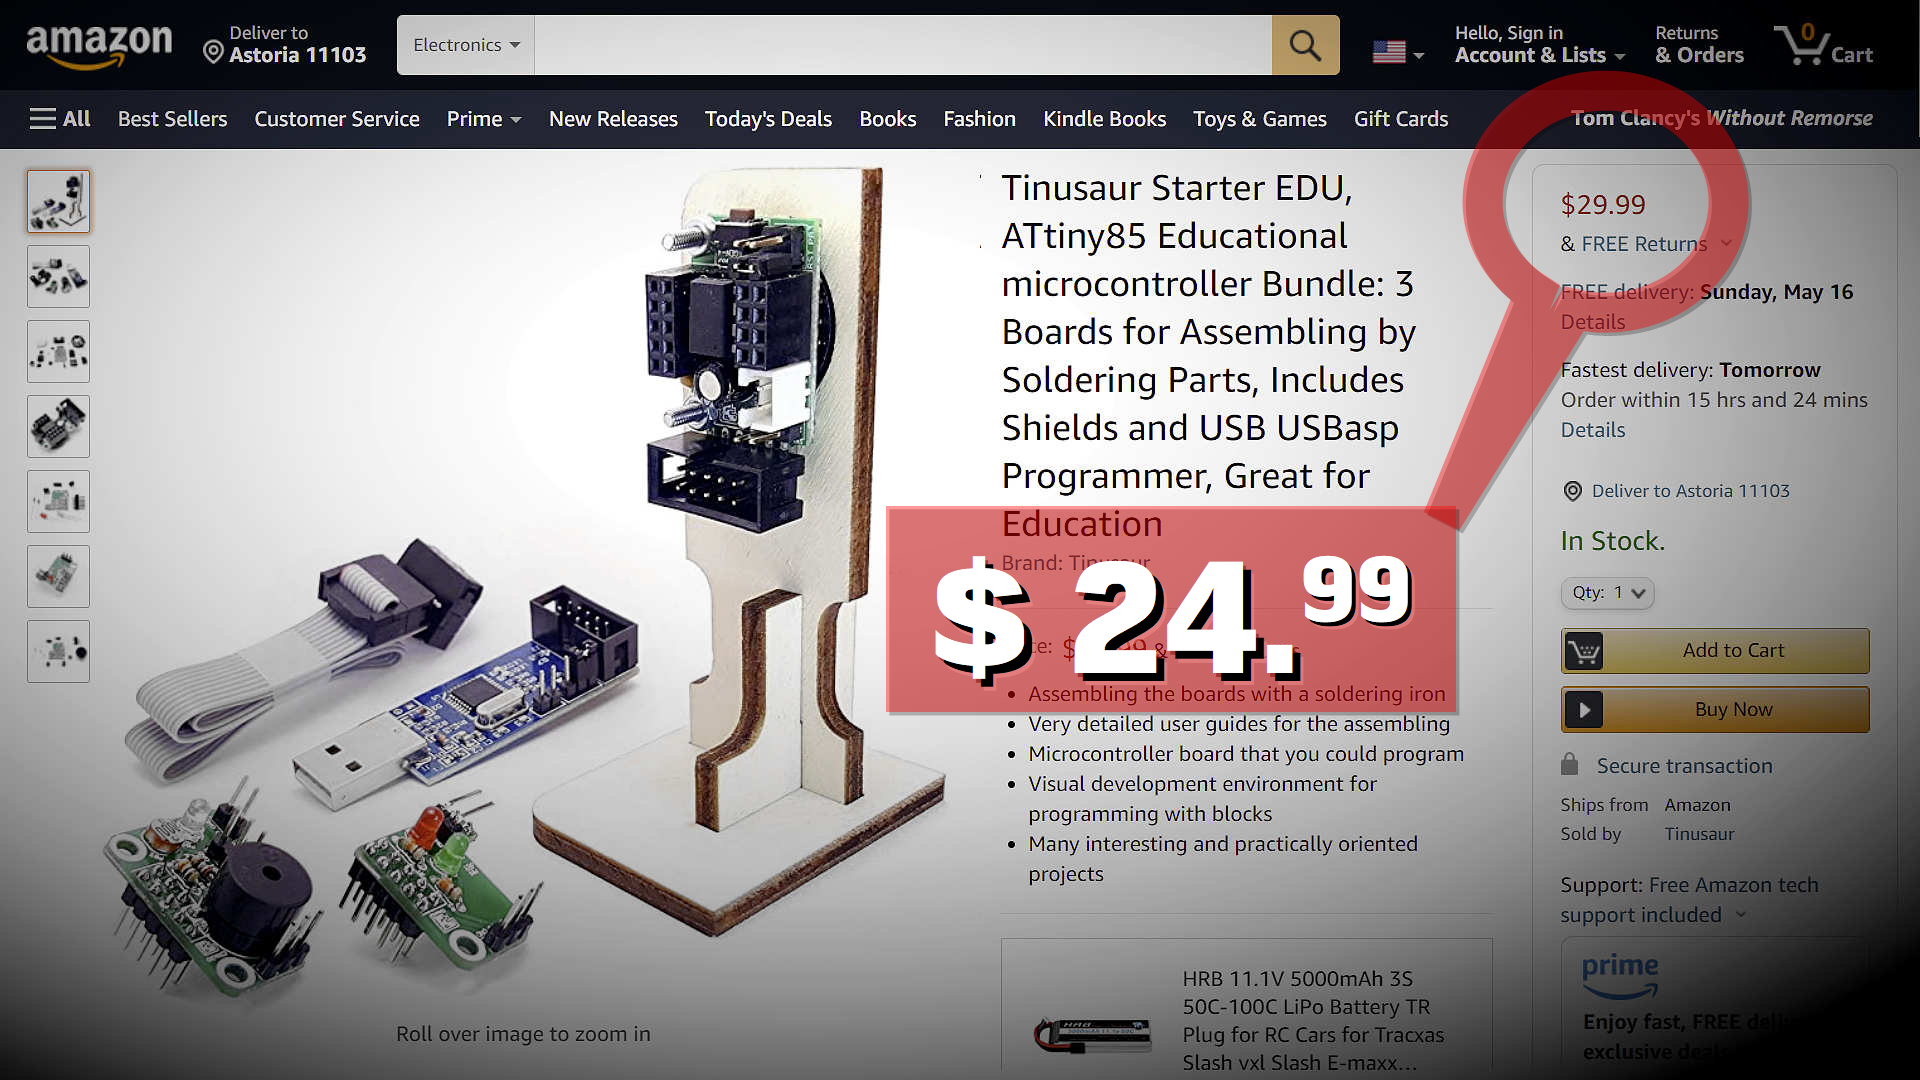 Tinusaur products available on Amazon USA